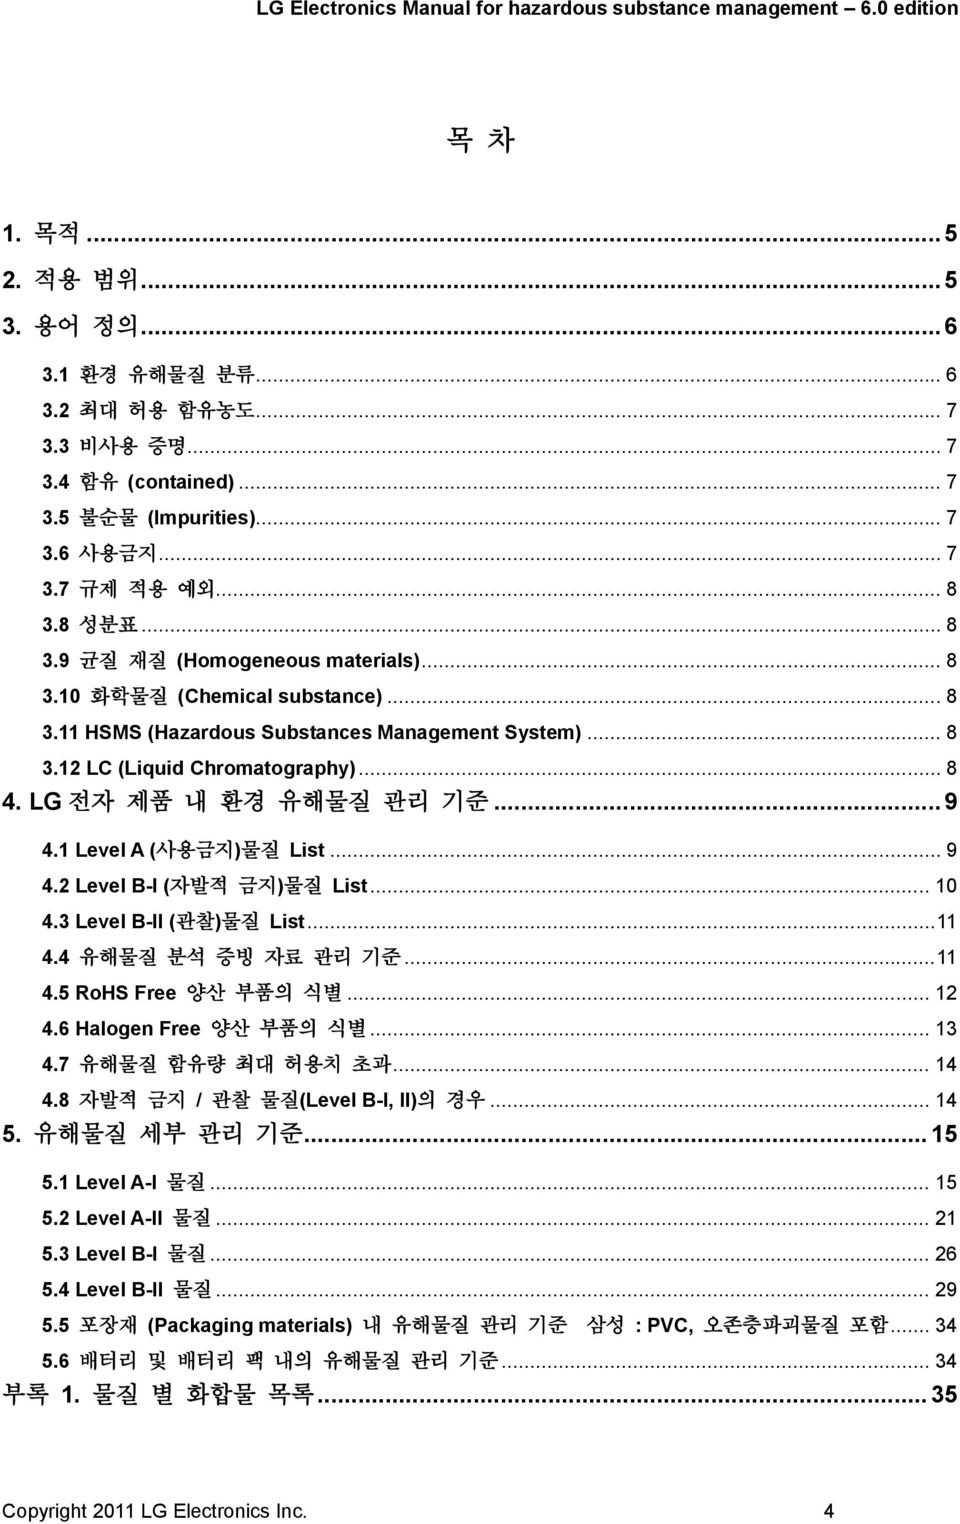 LG 전자 제품 내 환경 유해물질 관리 기준... 9 4.1 Level A (사용금지)물질 List... 9 4.2 Level B-I (자발적 금지)물질 List... 10 4.3 Level B-II (관찰)물질 List... 11 4.4 유해물질 분석 증빙 자료 관리 기준... 11 4.5 RoHS Free 양산 부품의 식별... 12 4.